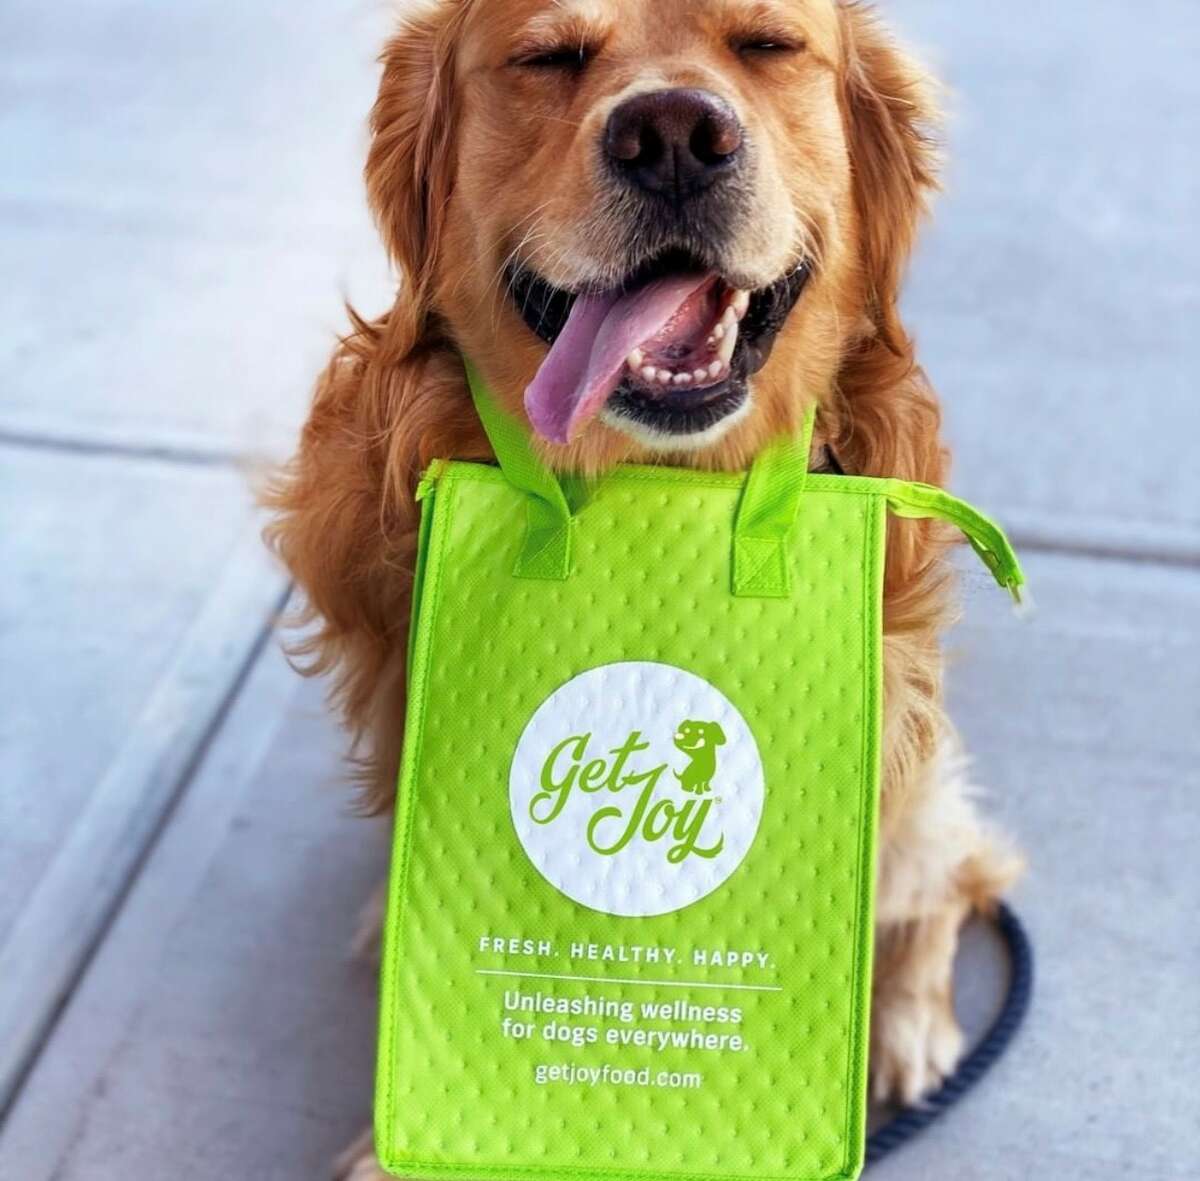 Get Joy, a dog food company based in Norwalk, will open a pop-up shop in Darien tomorrow. 